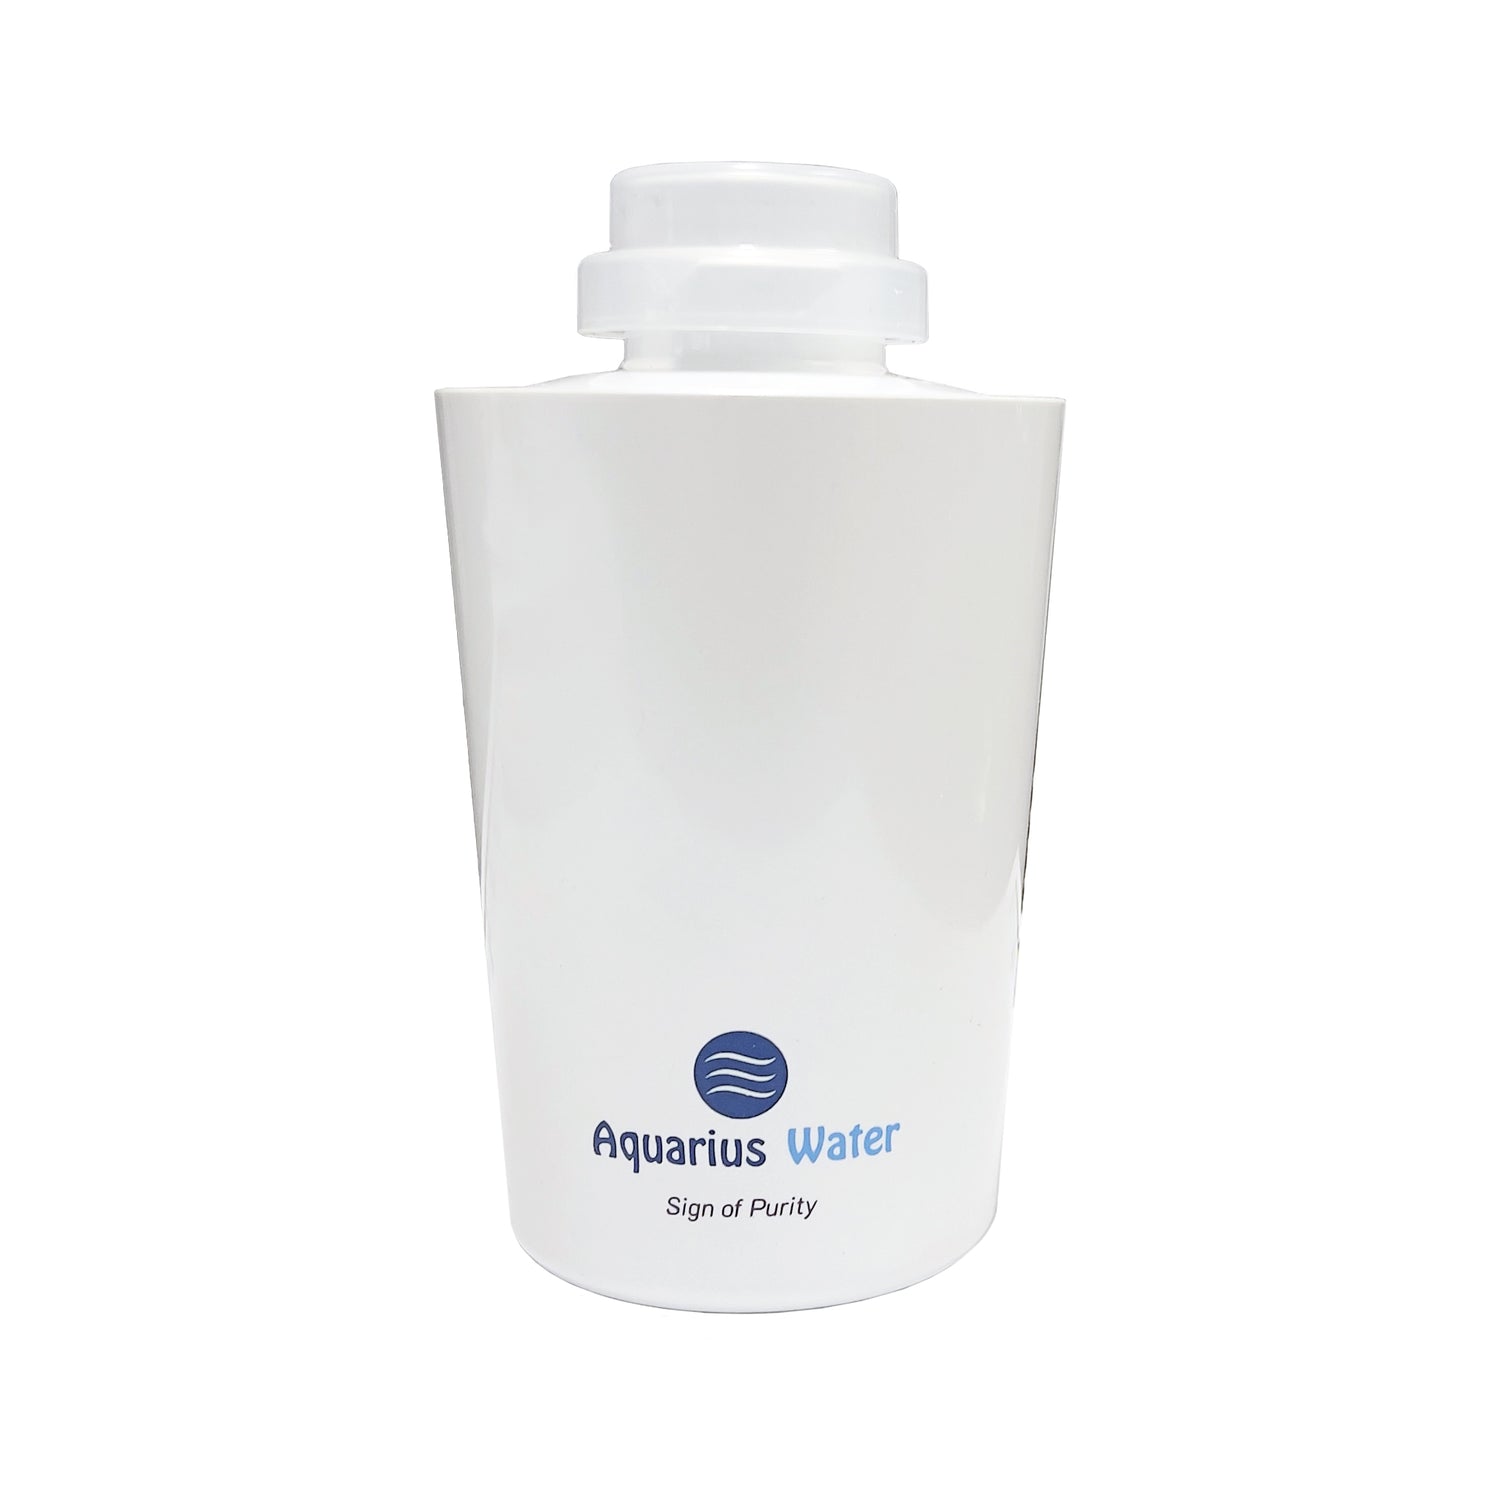 Aquarius Water C360 Replacement Shower Filter Aquarius Water